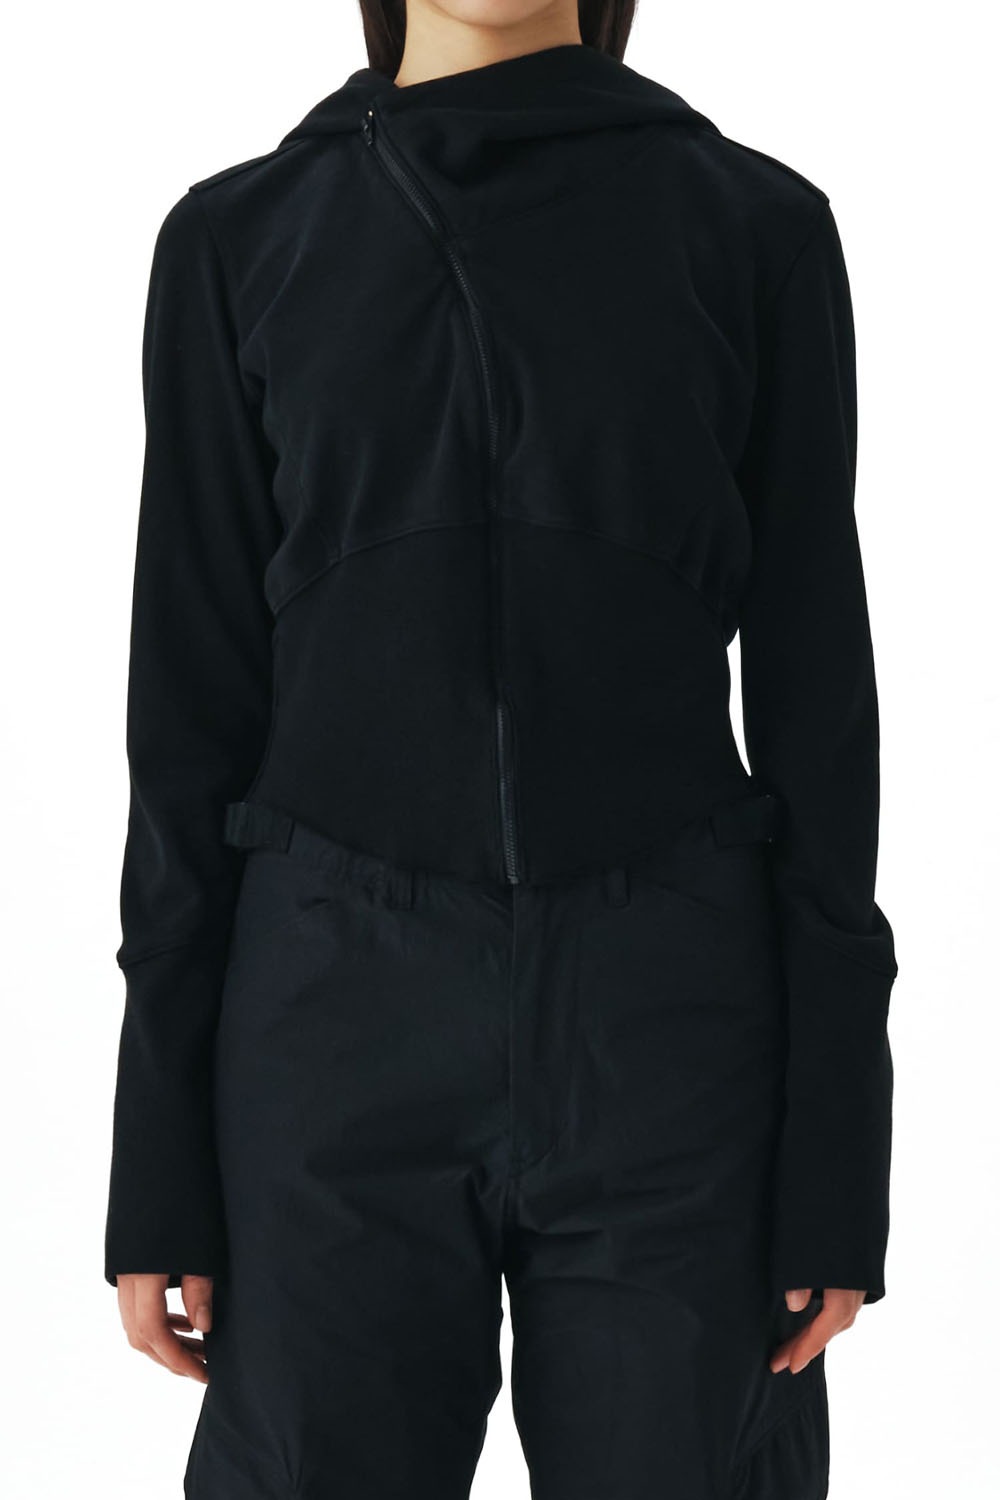 Womens Curved Hooded Sweat Zip Jacket-Black